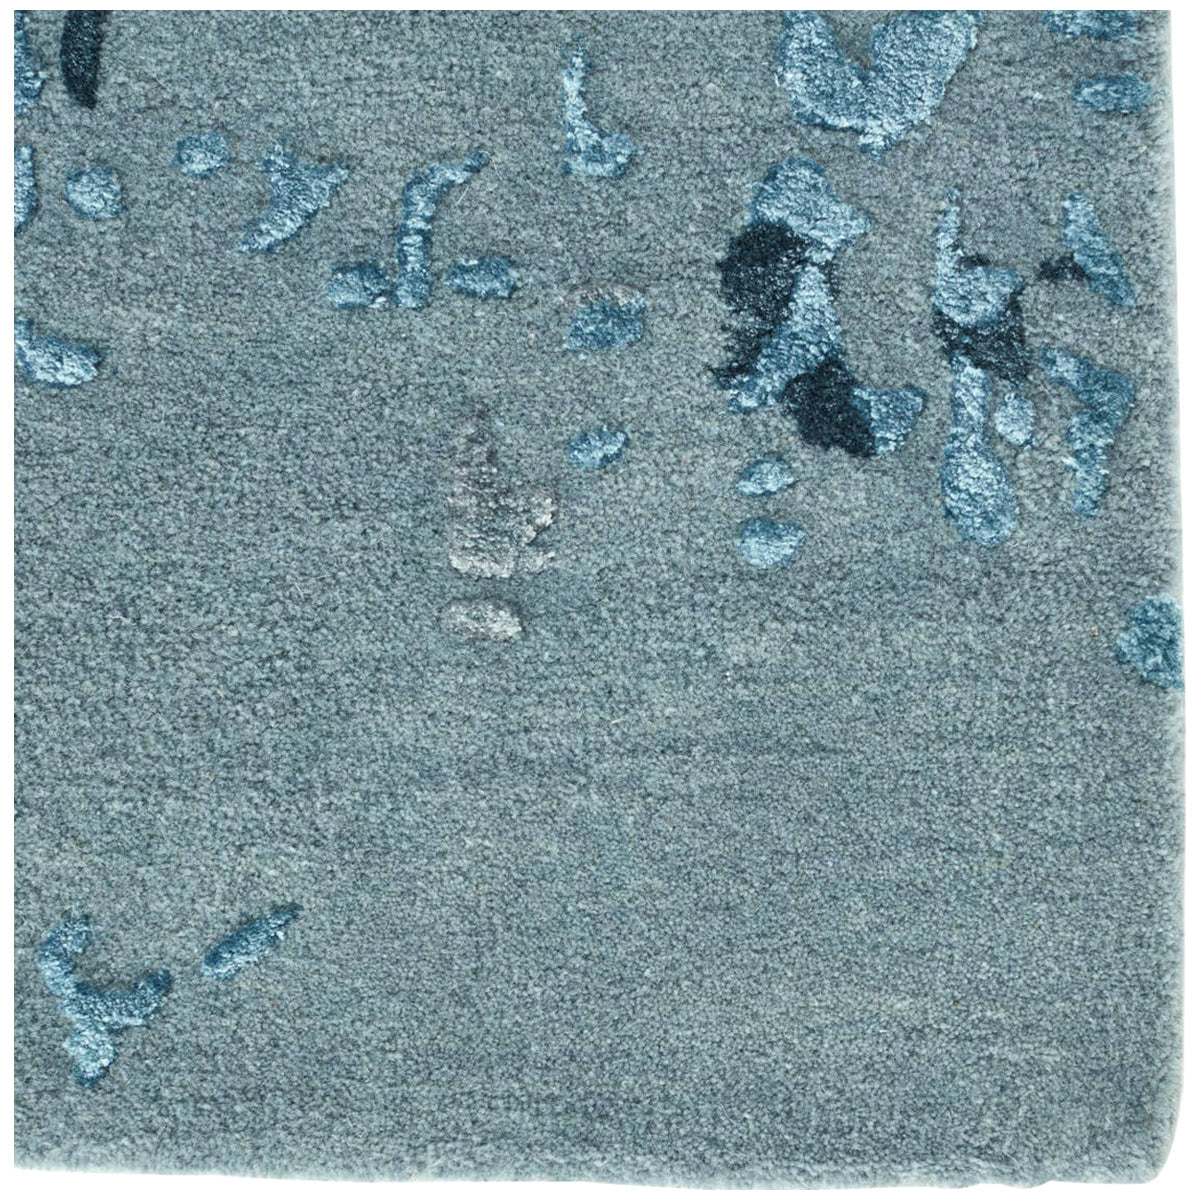 Jaipur Fragment Astris Abstract Blue Light Gray FRG04 Area Rug